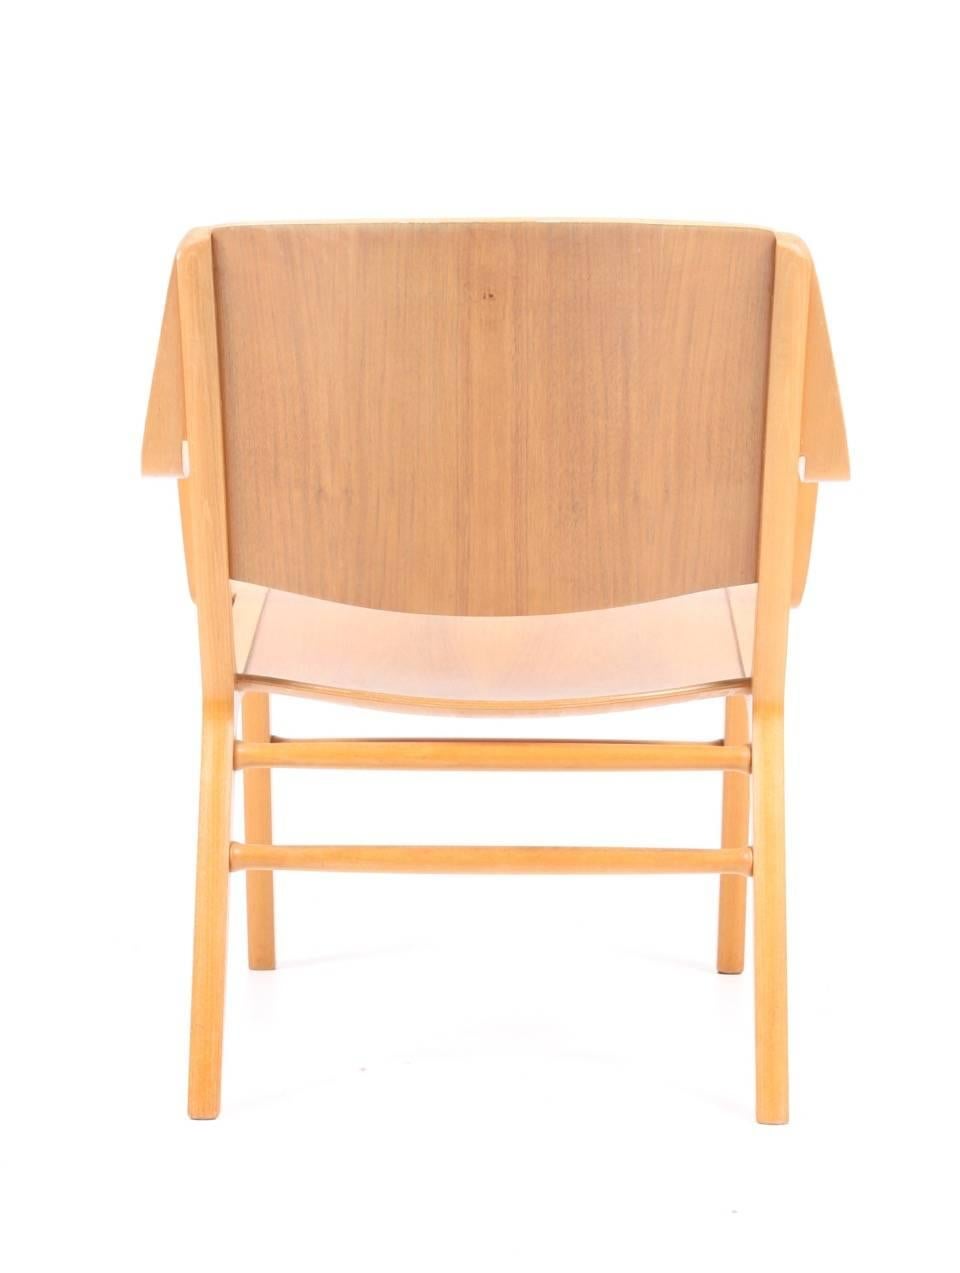 Danish AX Lounge Chair by Hvidt & Mølgaard